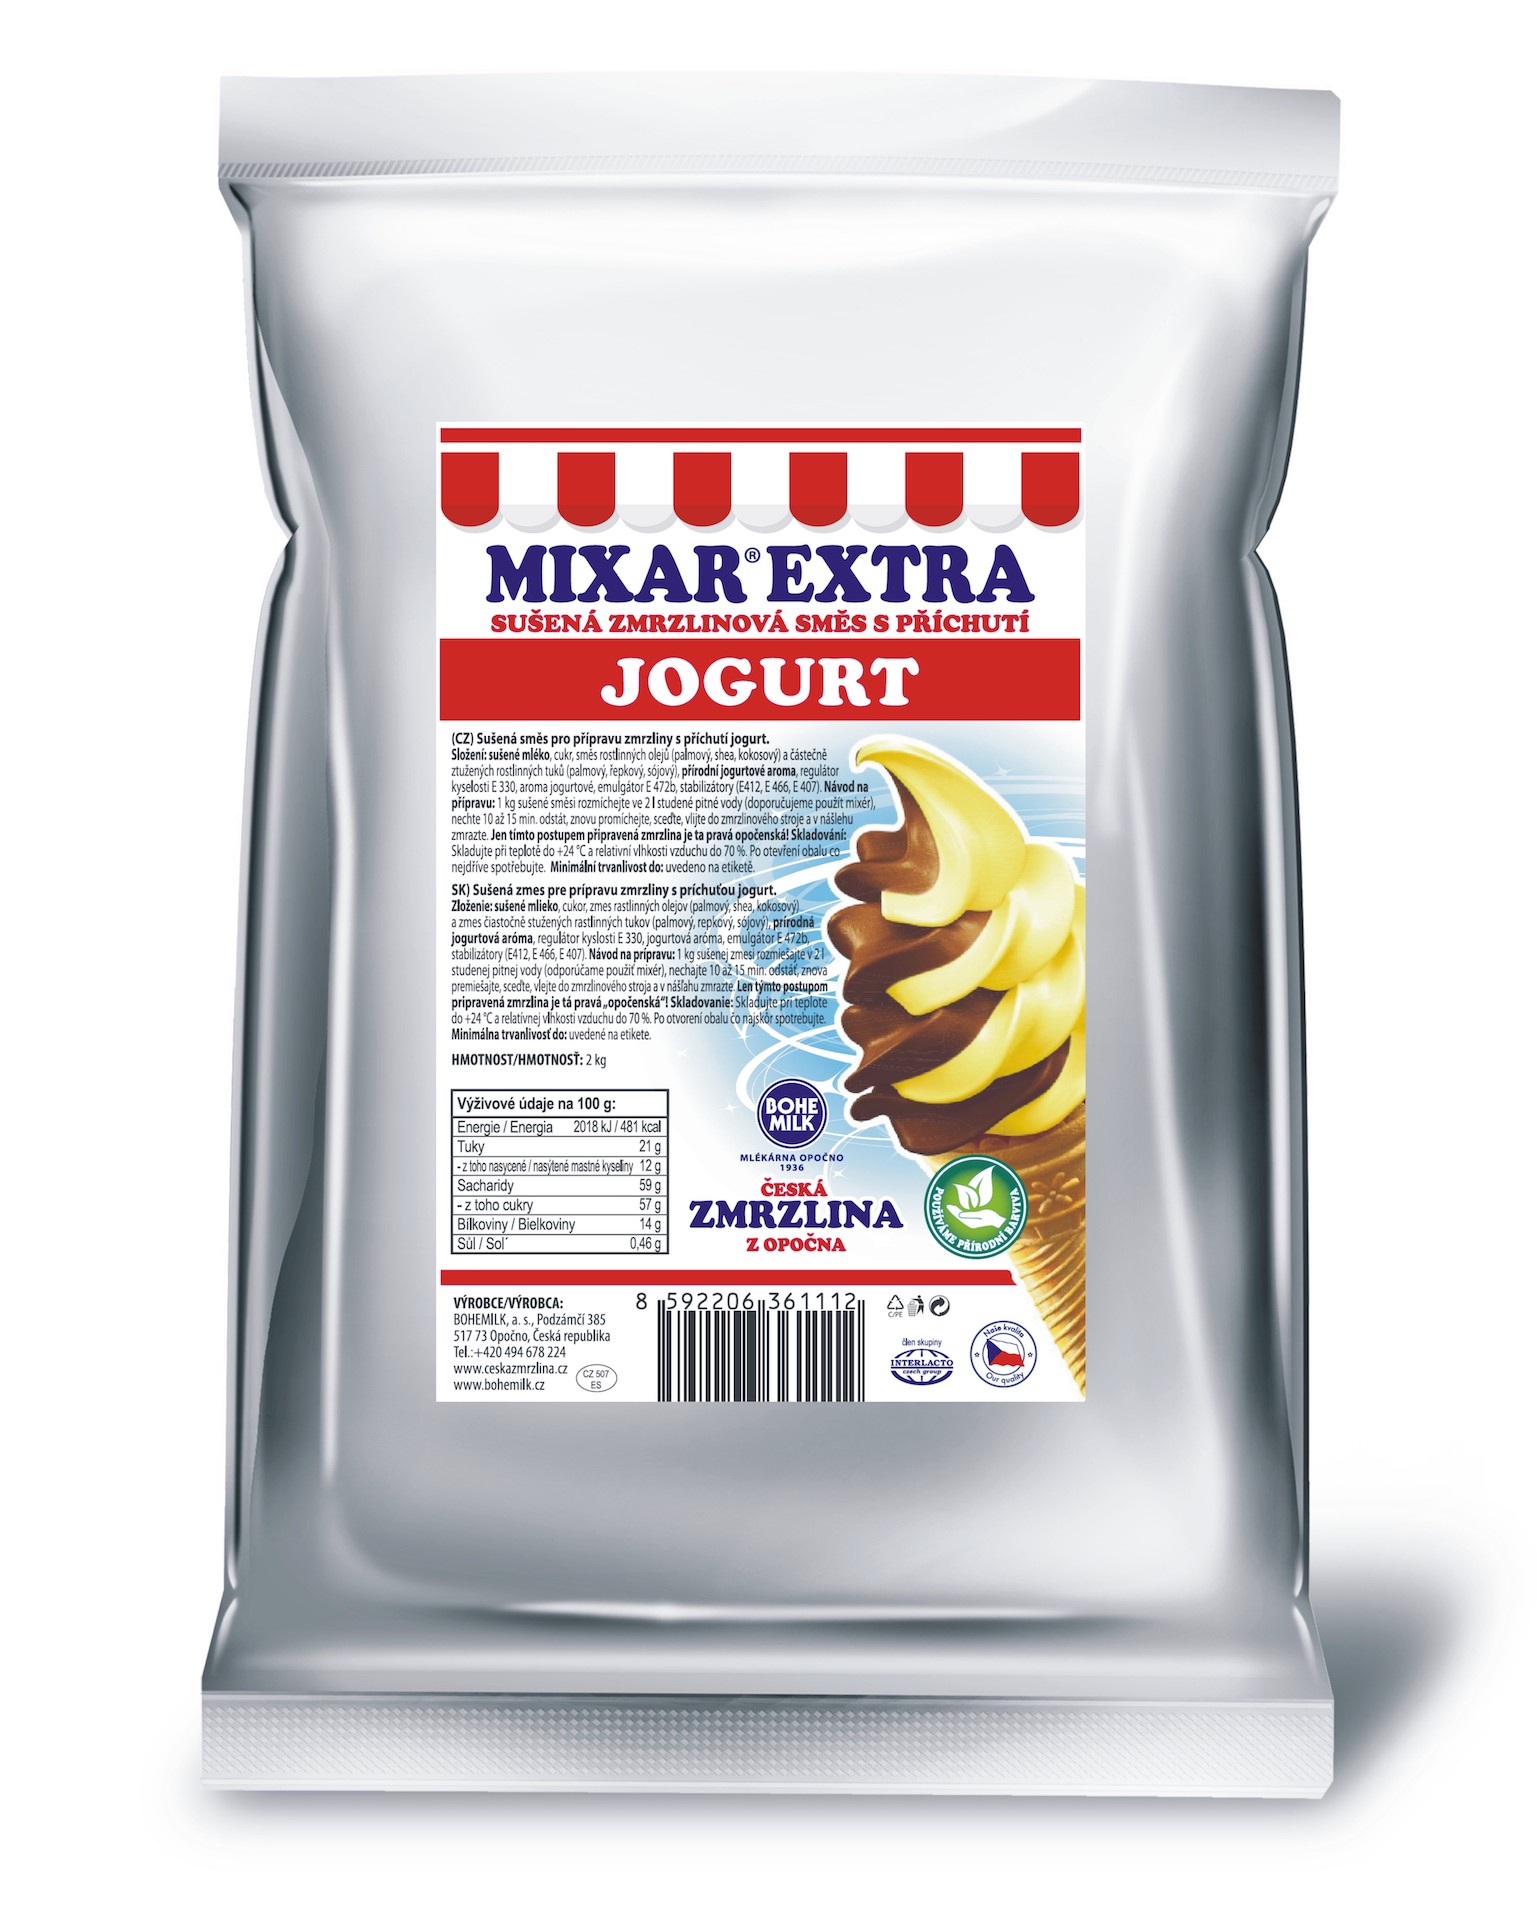 MIXAR EXTRA Jogurt, 2kg